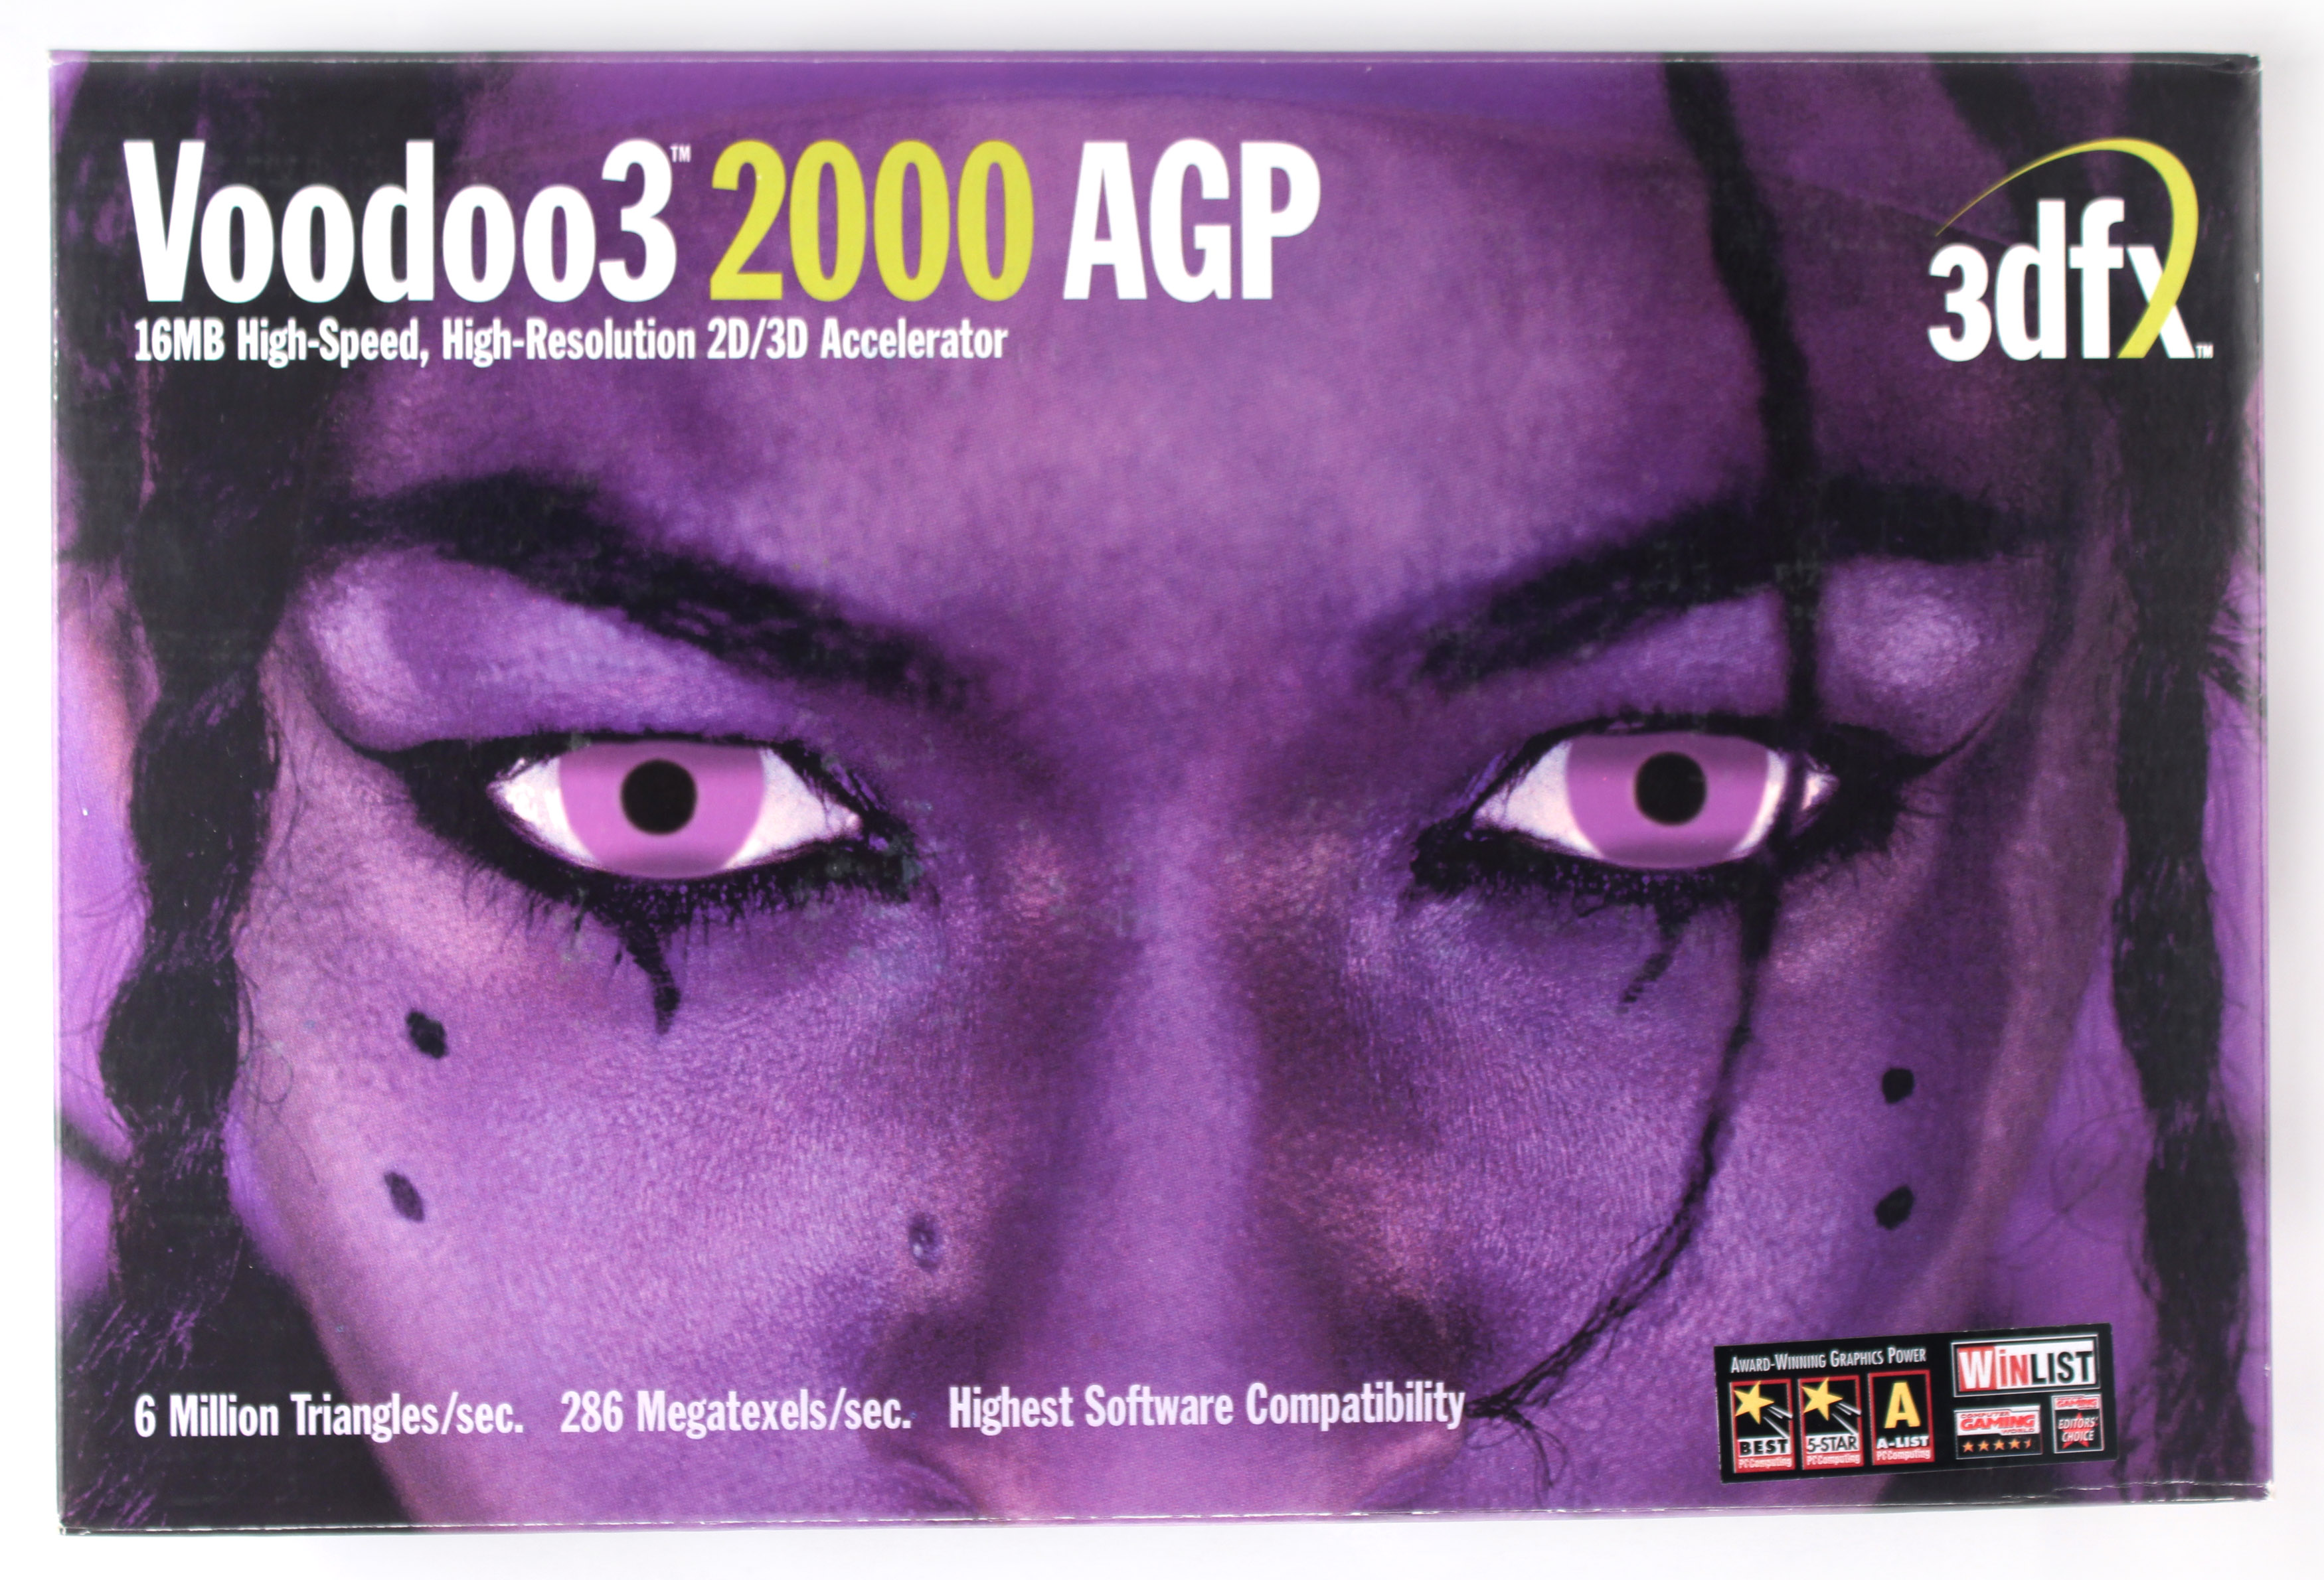 3dfx_voodoo_3_2000_agp_box_f.jpg